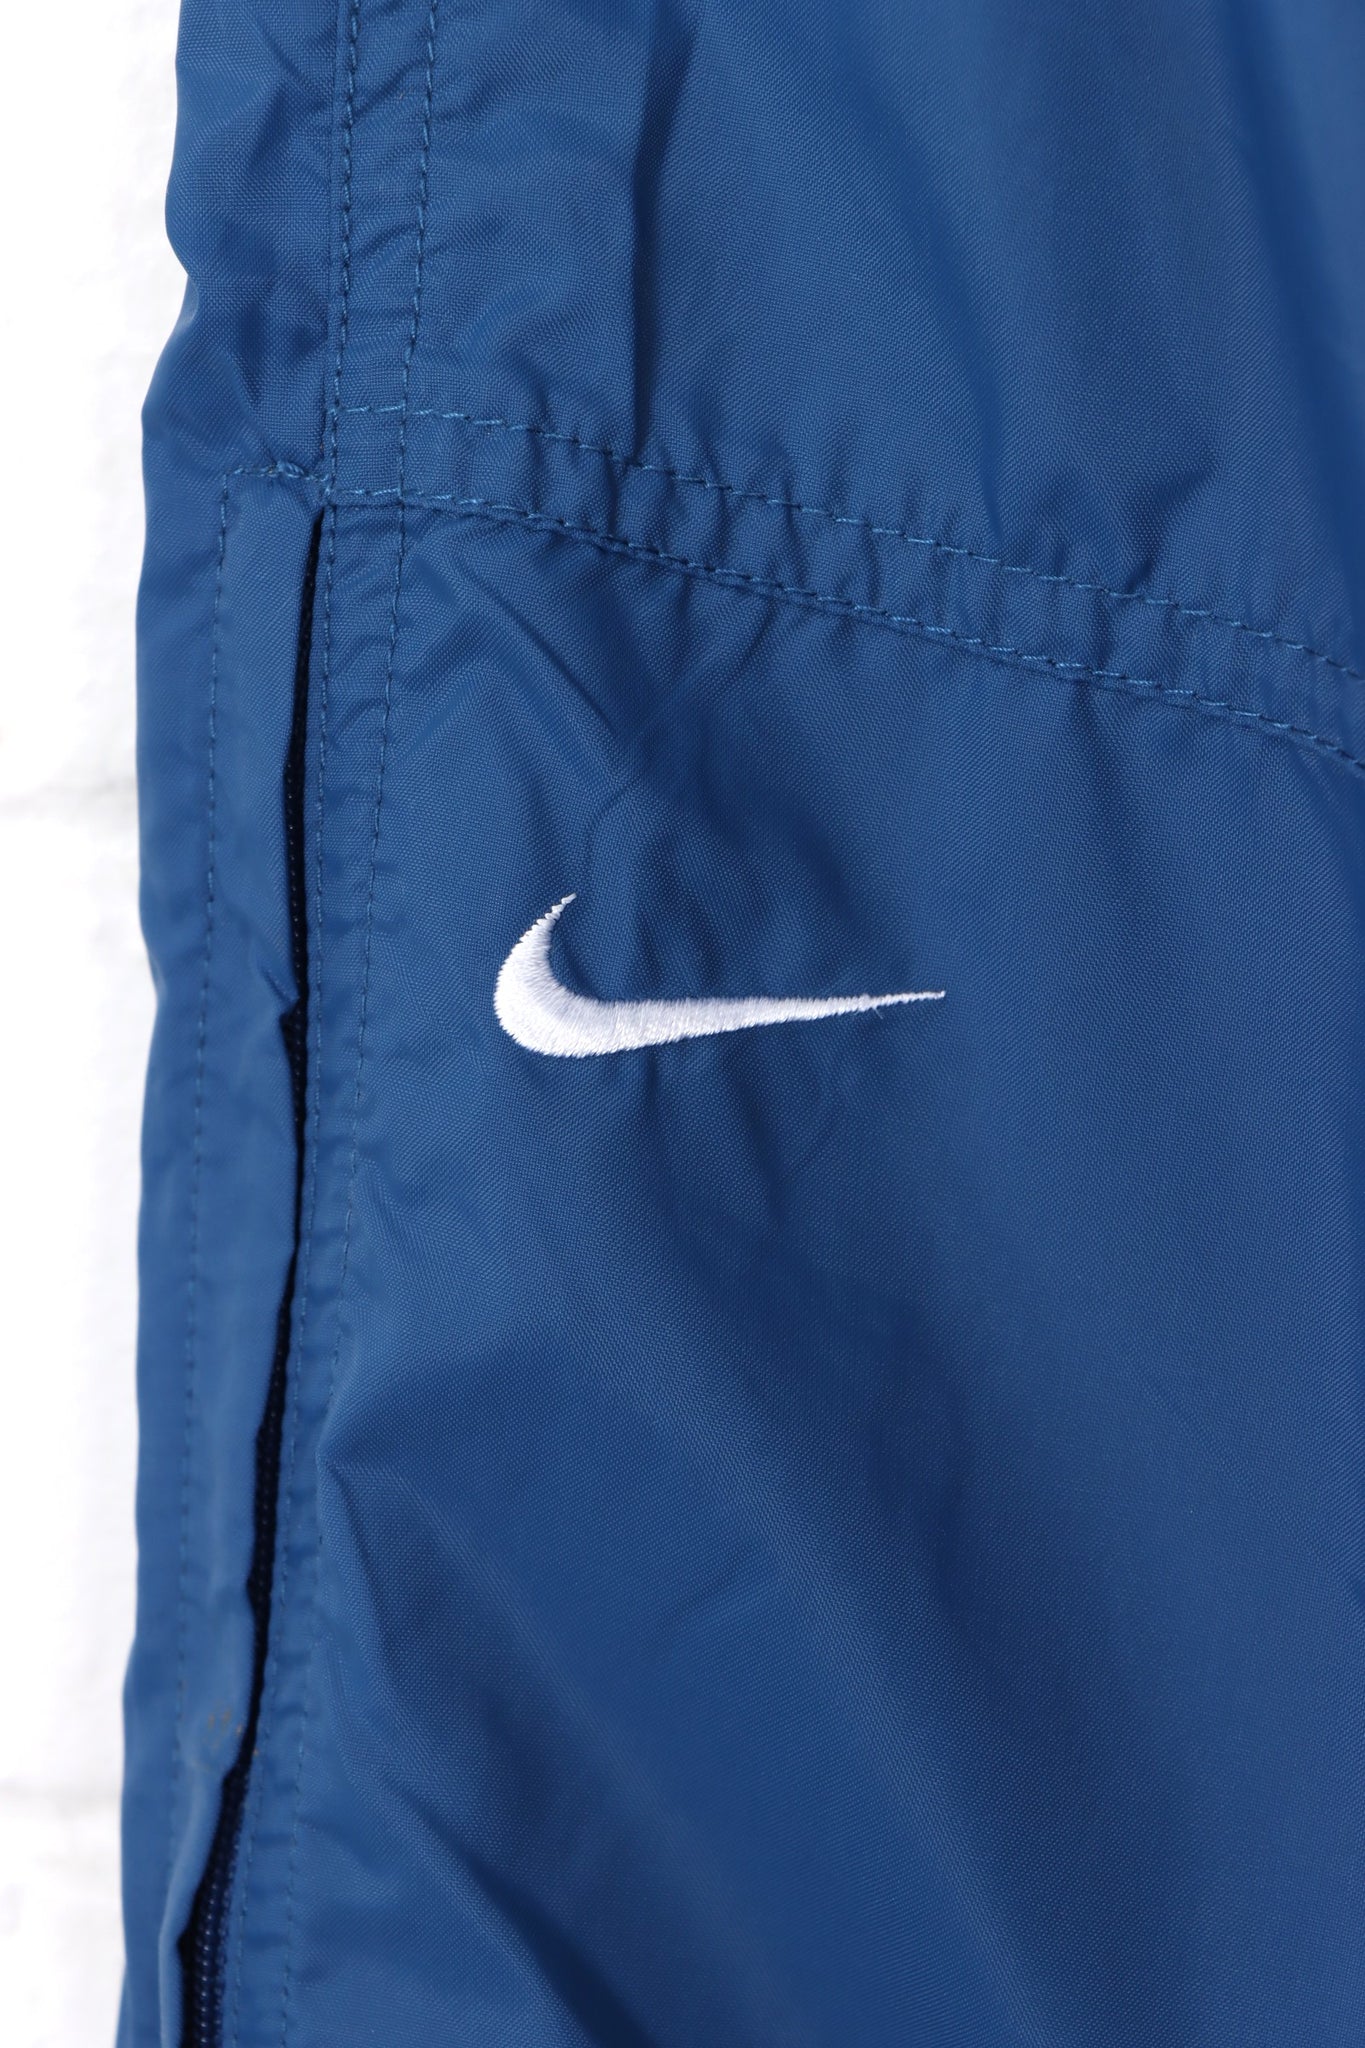 Vintage 1990s Nike Navy Blue Lined Nylon Track Pants